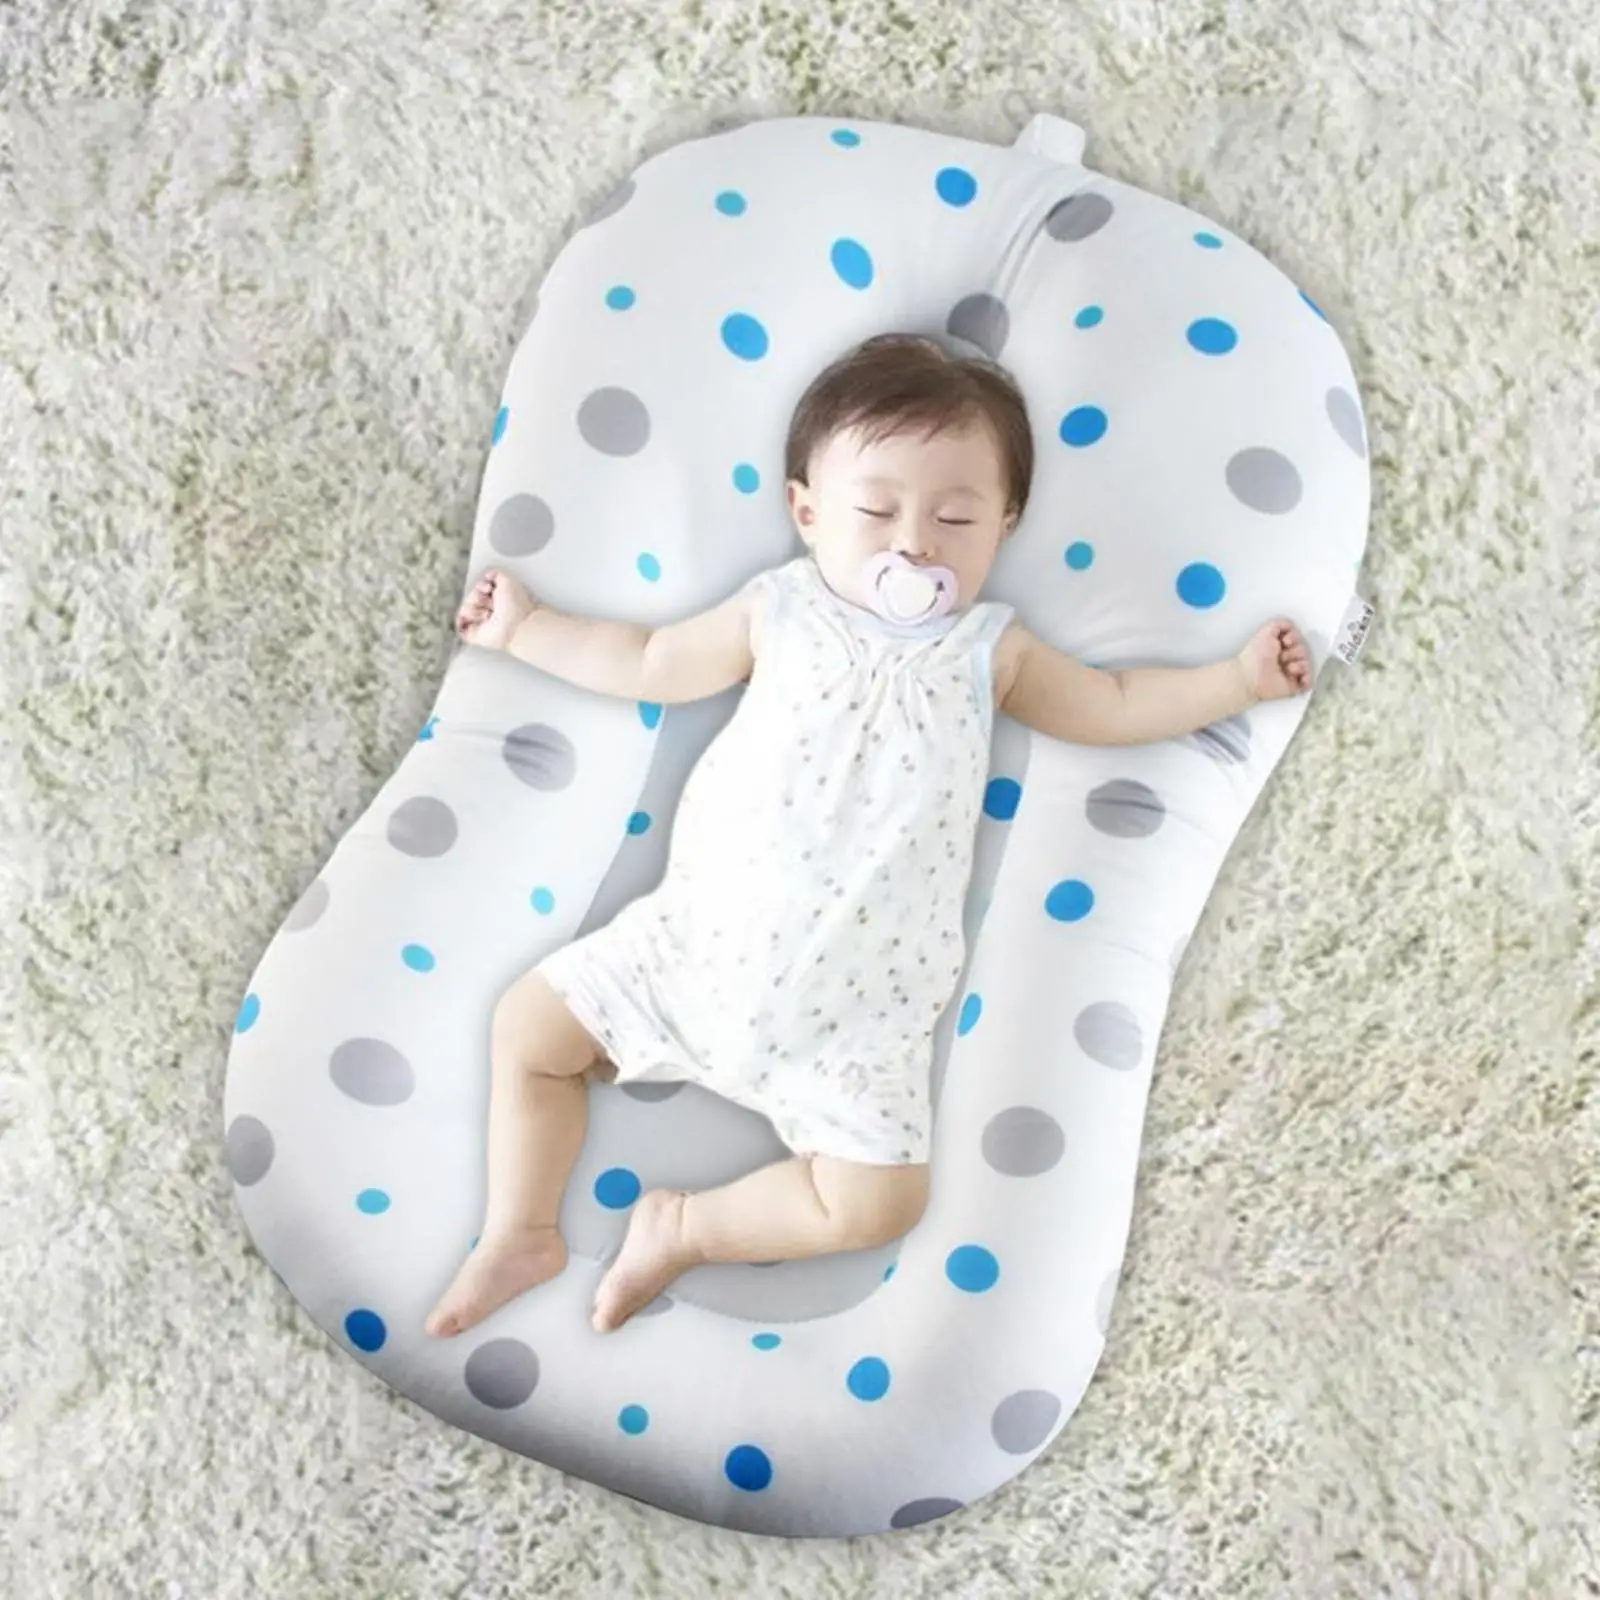 Baby Bath Mat Breathable Mesh Nonslip Hook Design Baby Bath Cushion Pad Bathing Tub Seat for Toddler Bathtub newborn